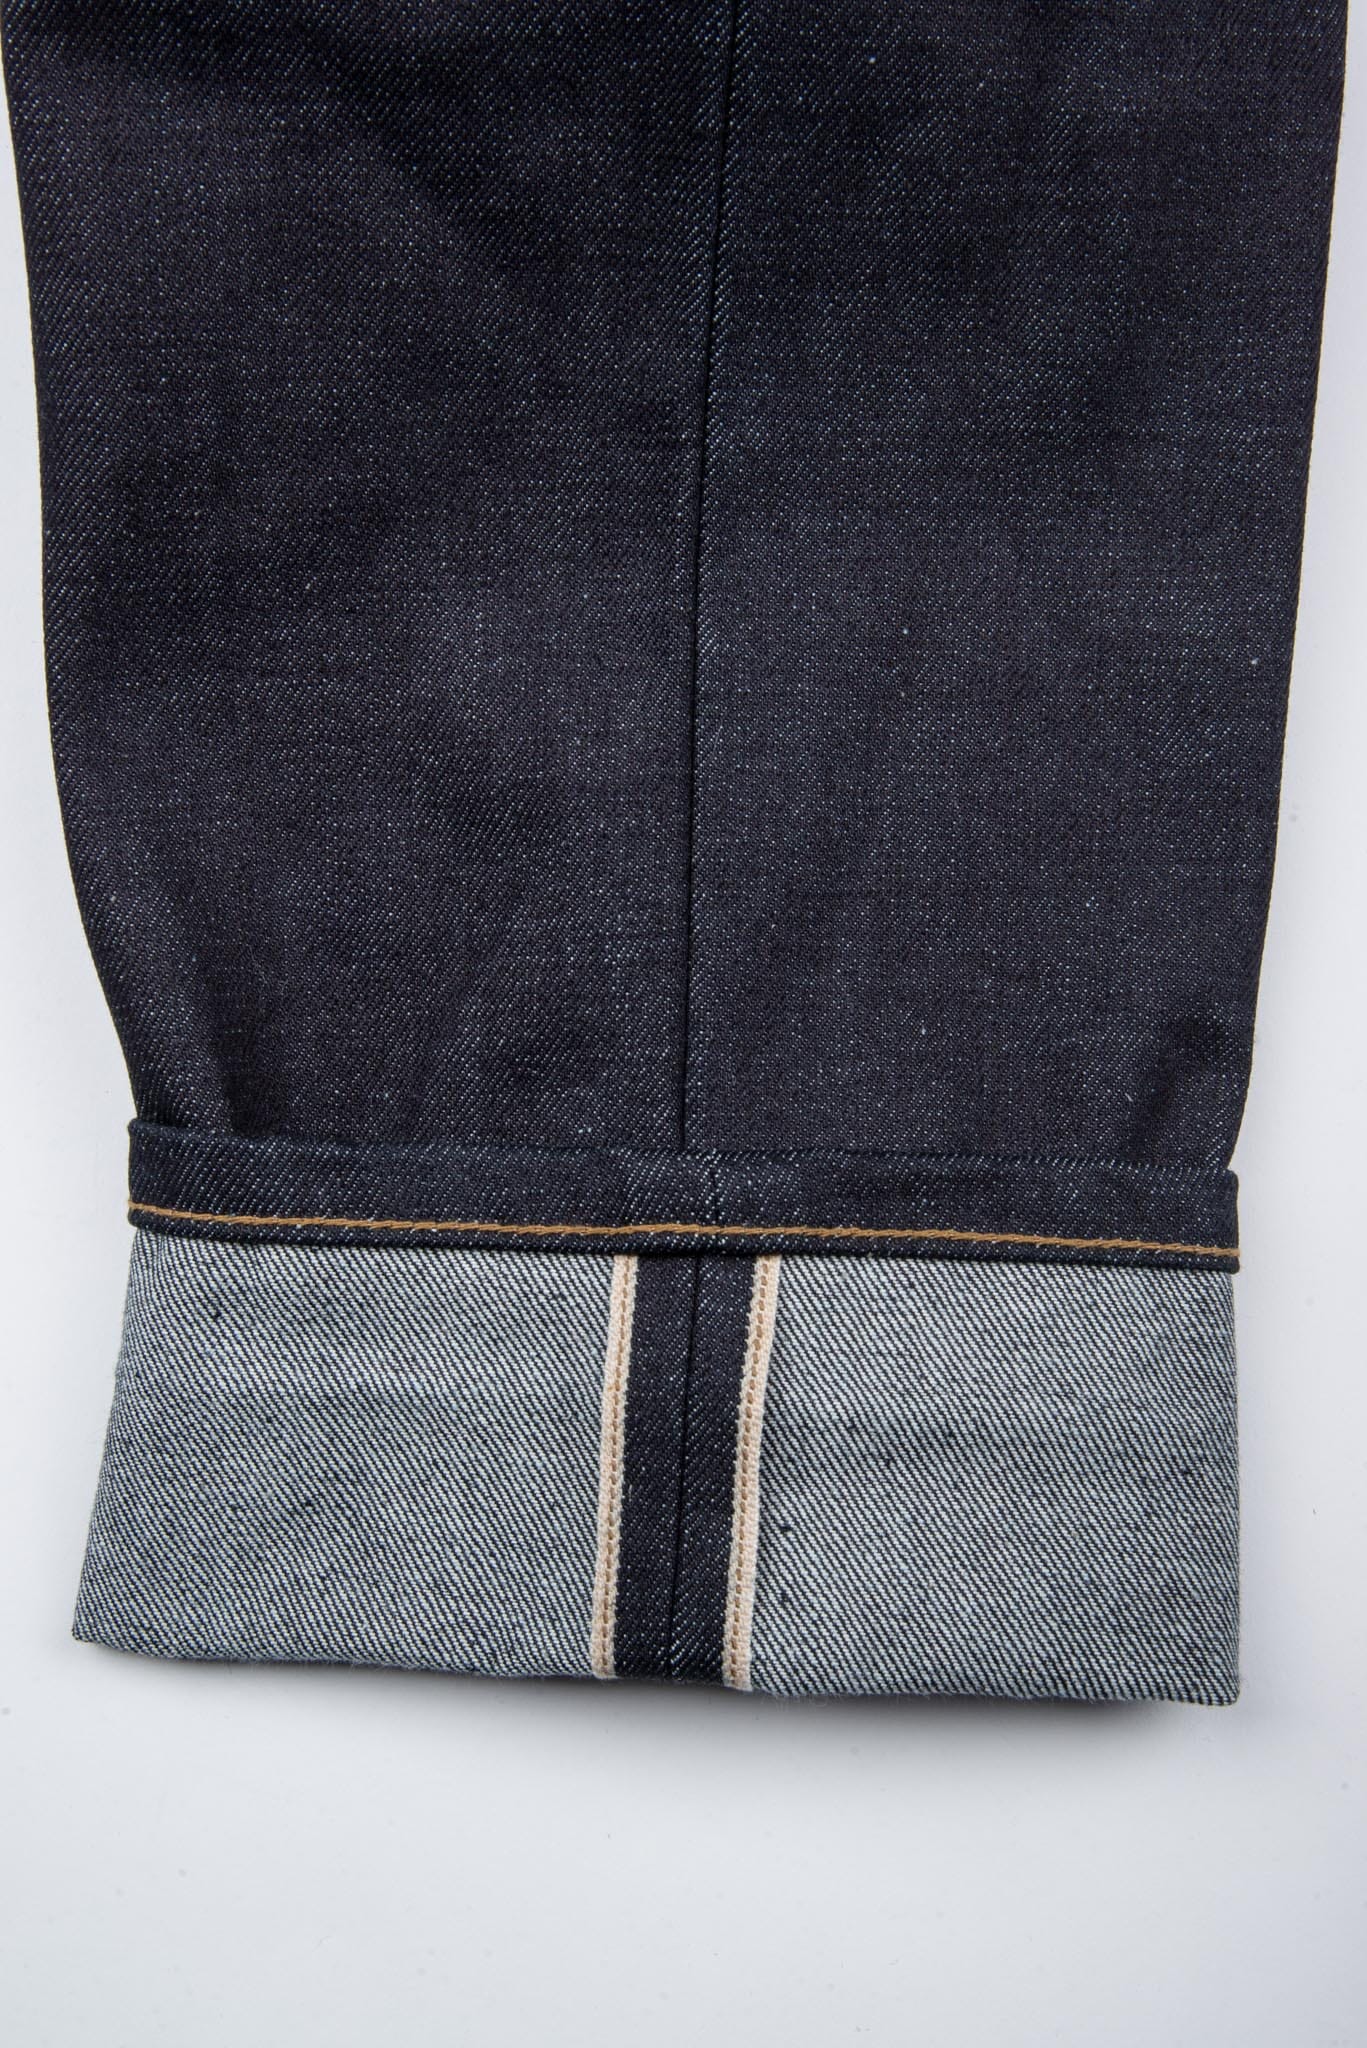 Freenote Cloth - Portola Taper 14.50oz Kaihara Denim - City Workshop Men's Supply Co.